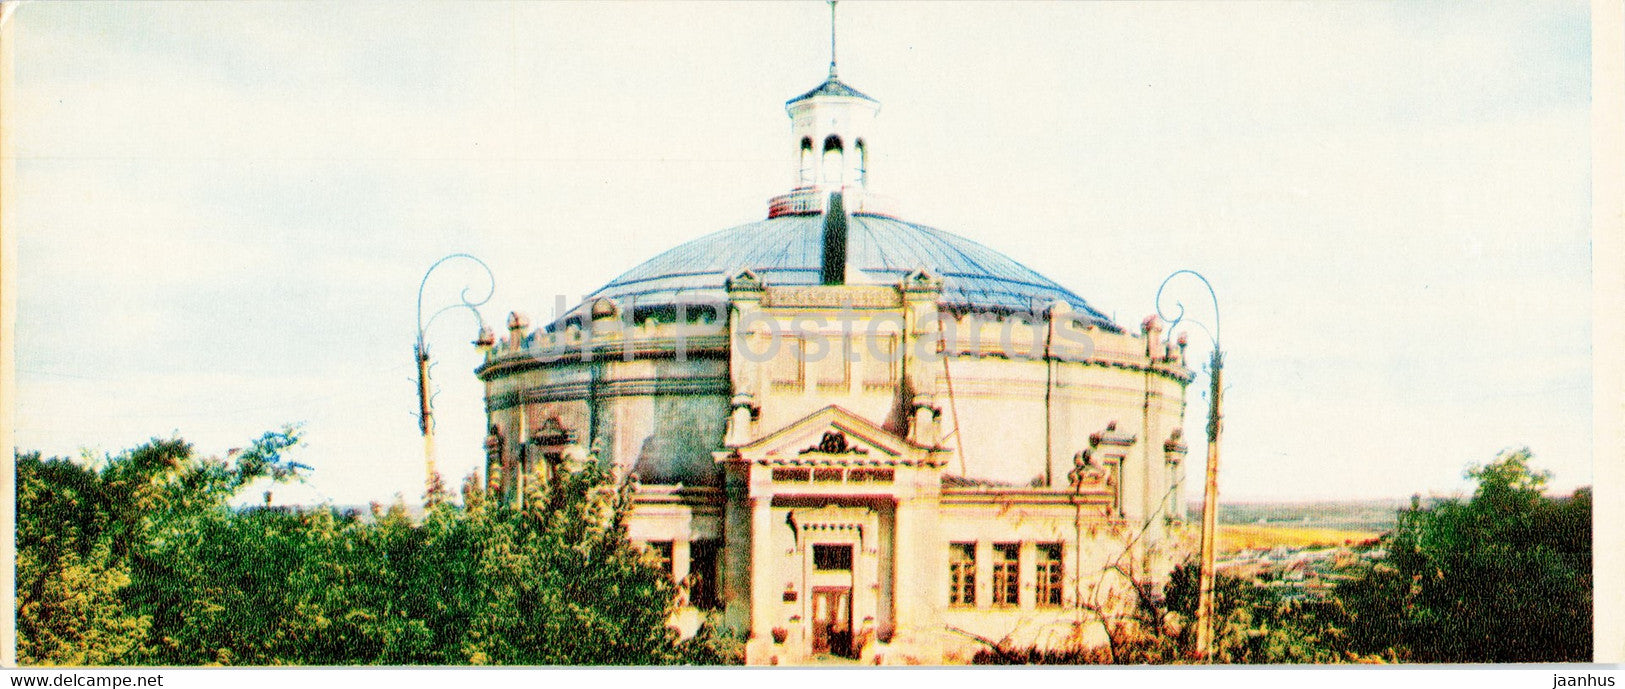 Sevastopol - Building of the Panorama The Defence of Sevastopol - Crimea - 1970 - Ukraine USSR - unused - JH Postcards